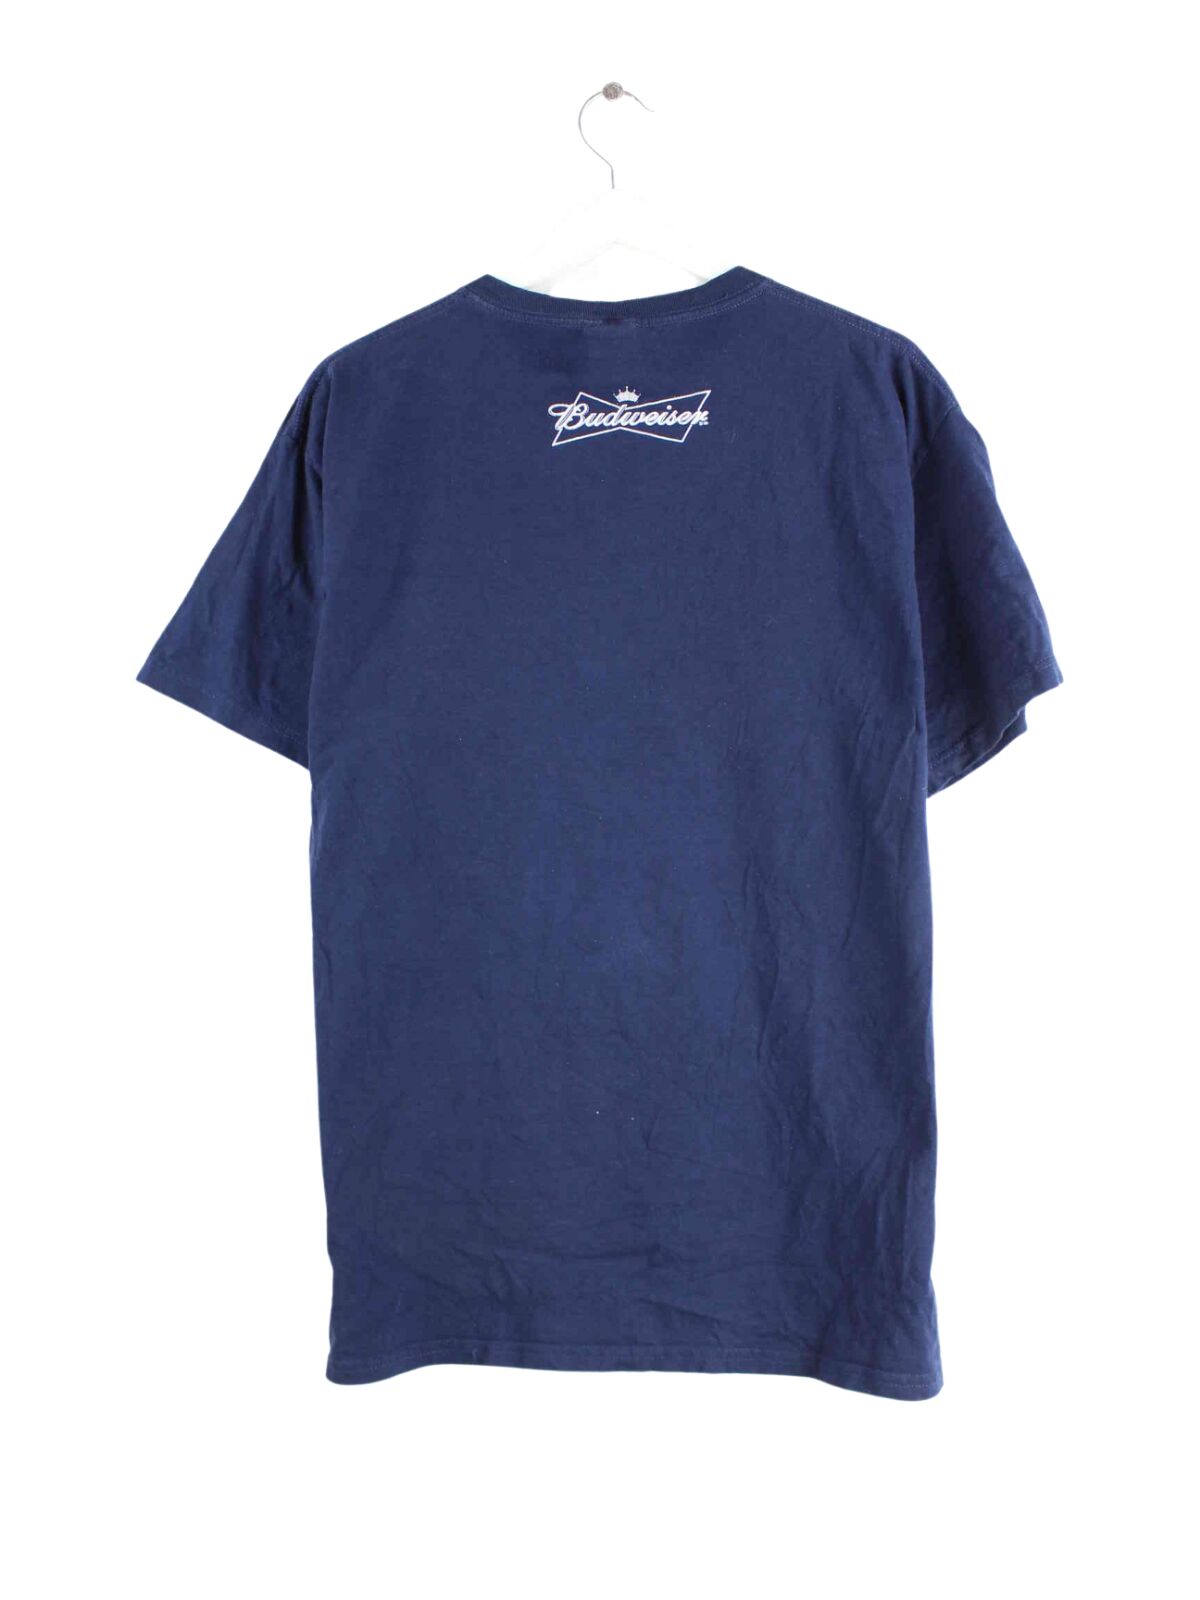 Fruit of the Loom Canada Hockey Print T-Shirt Blau L (back image)